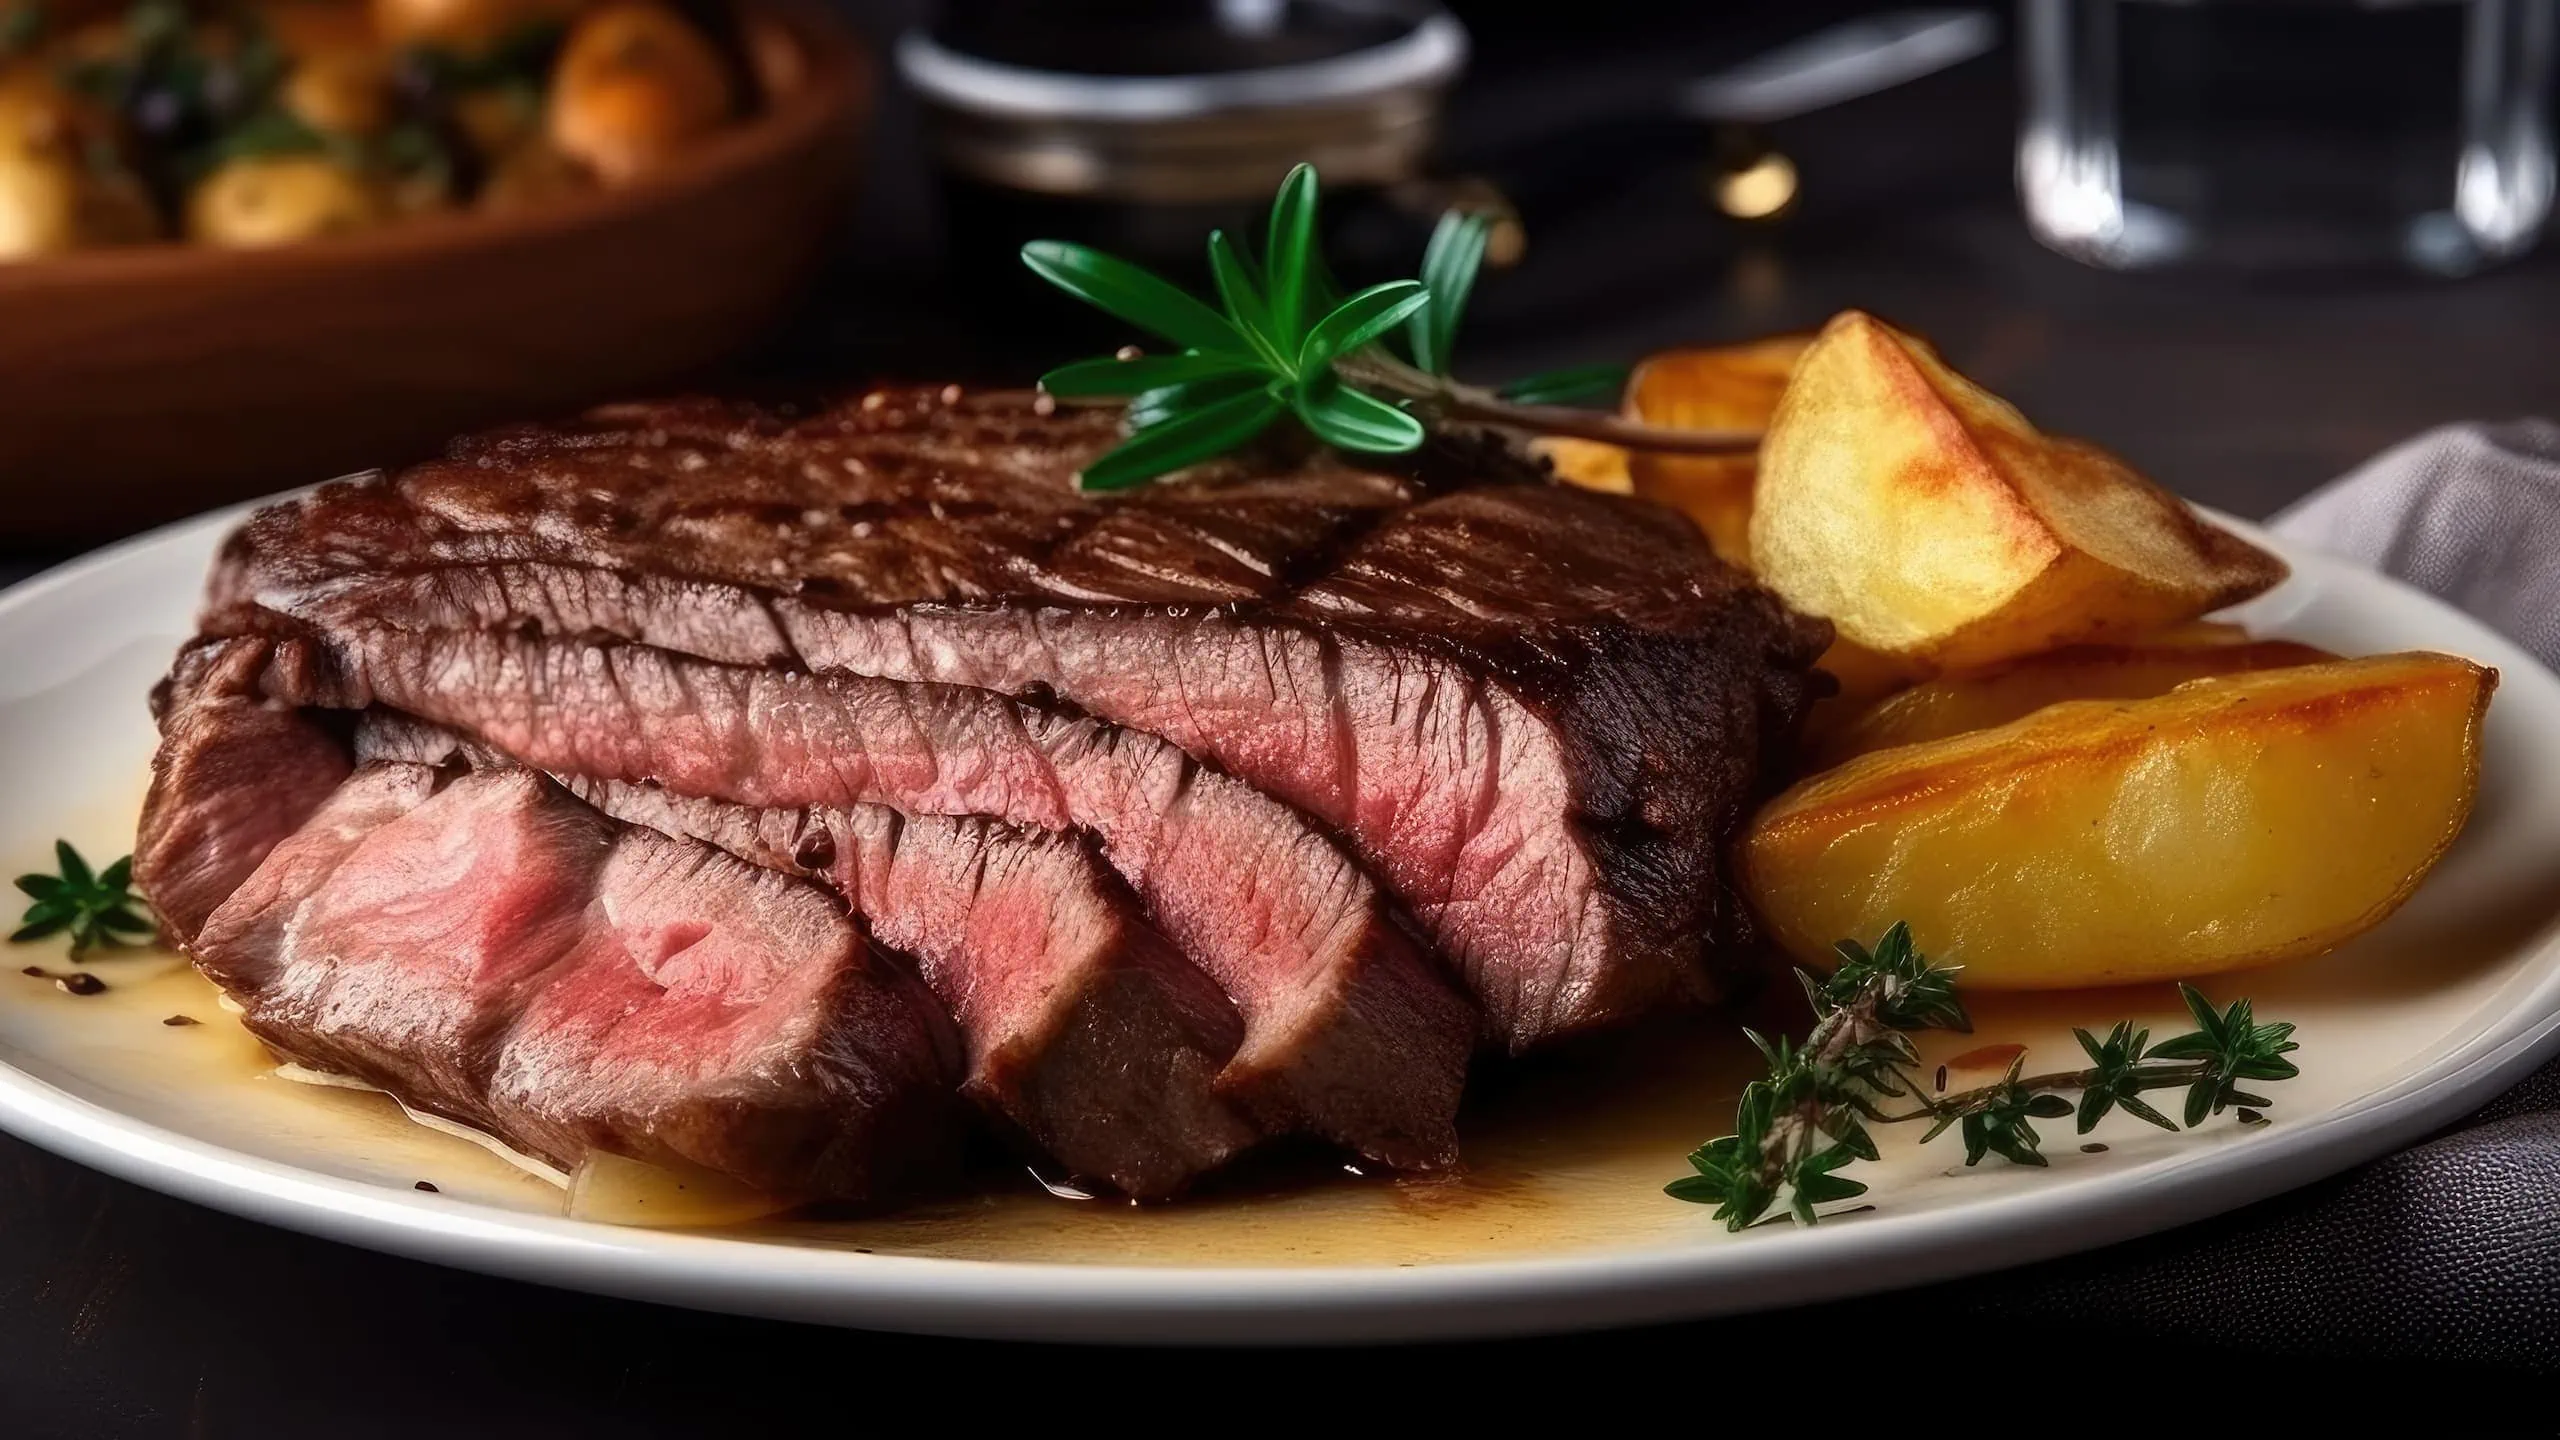 Plate with juicy steak